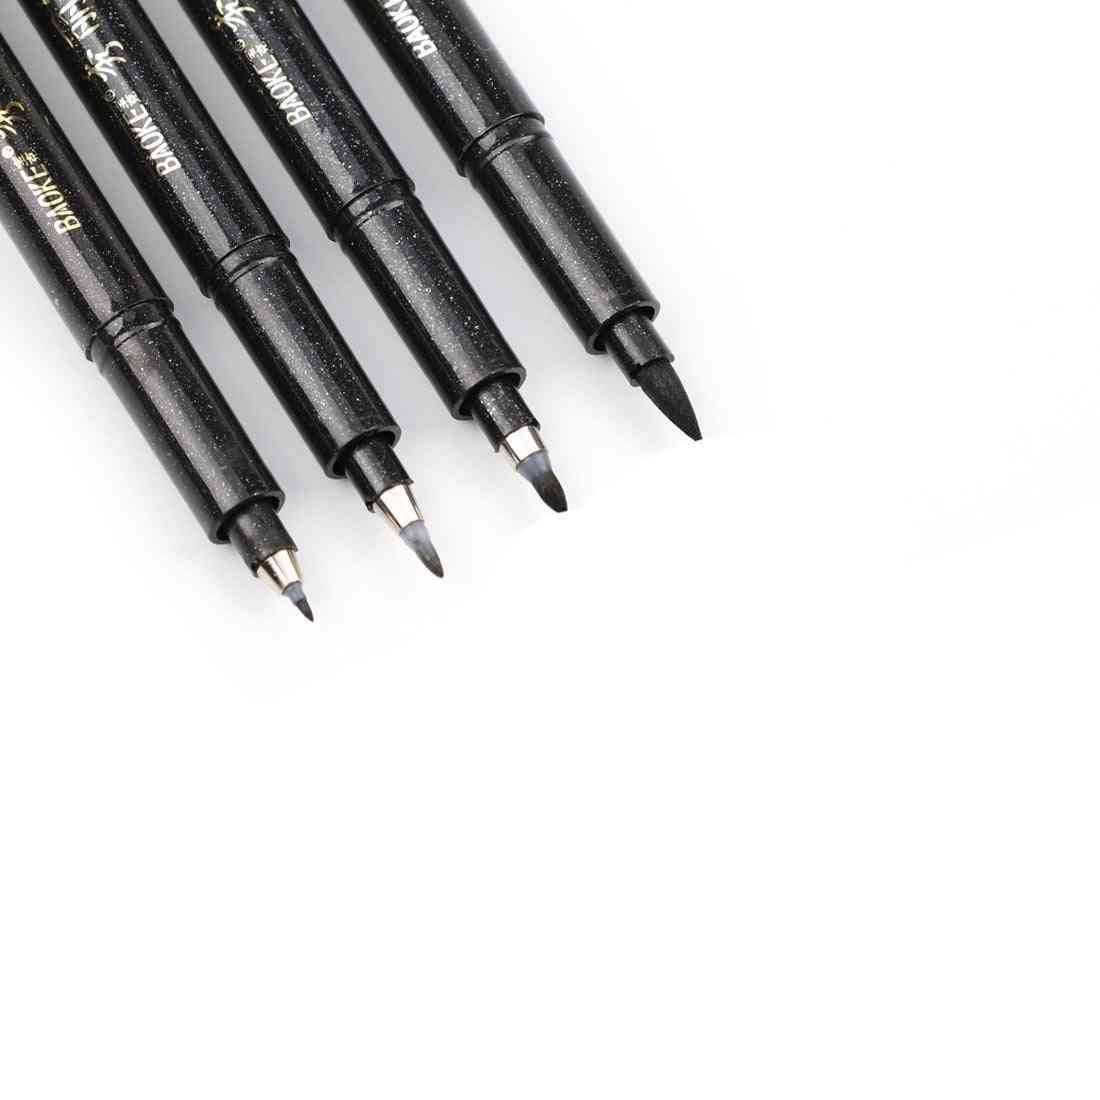 Calligraphy Brush Pen, Art Craft Writing Tools